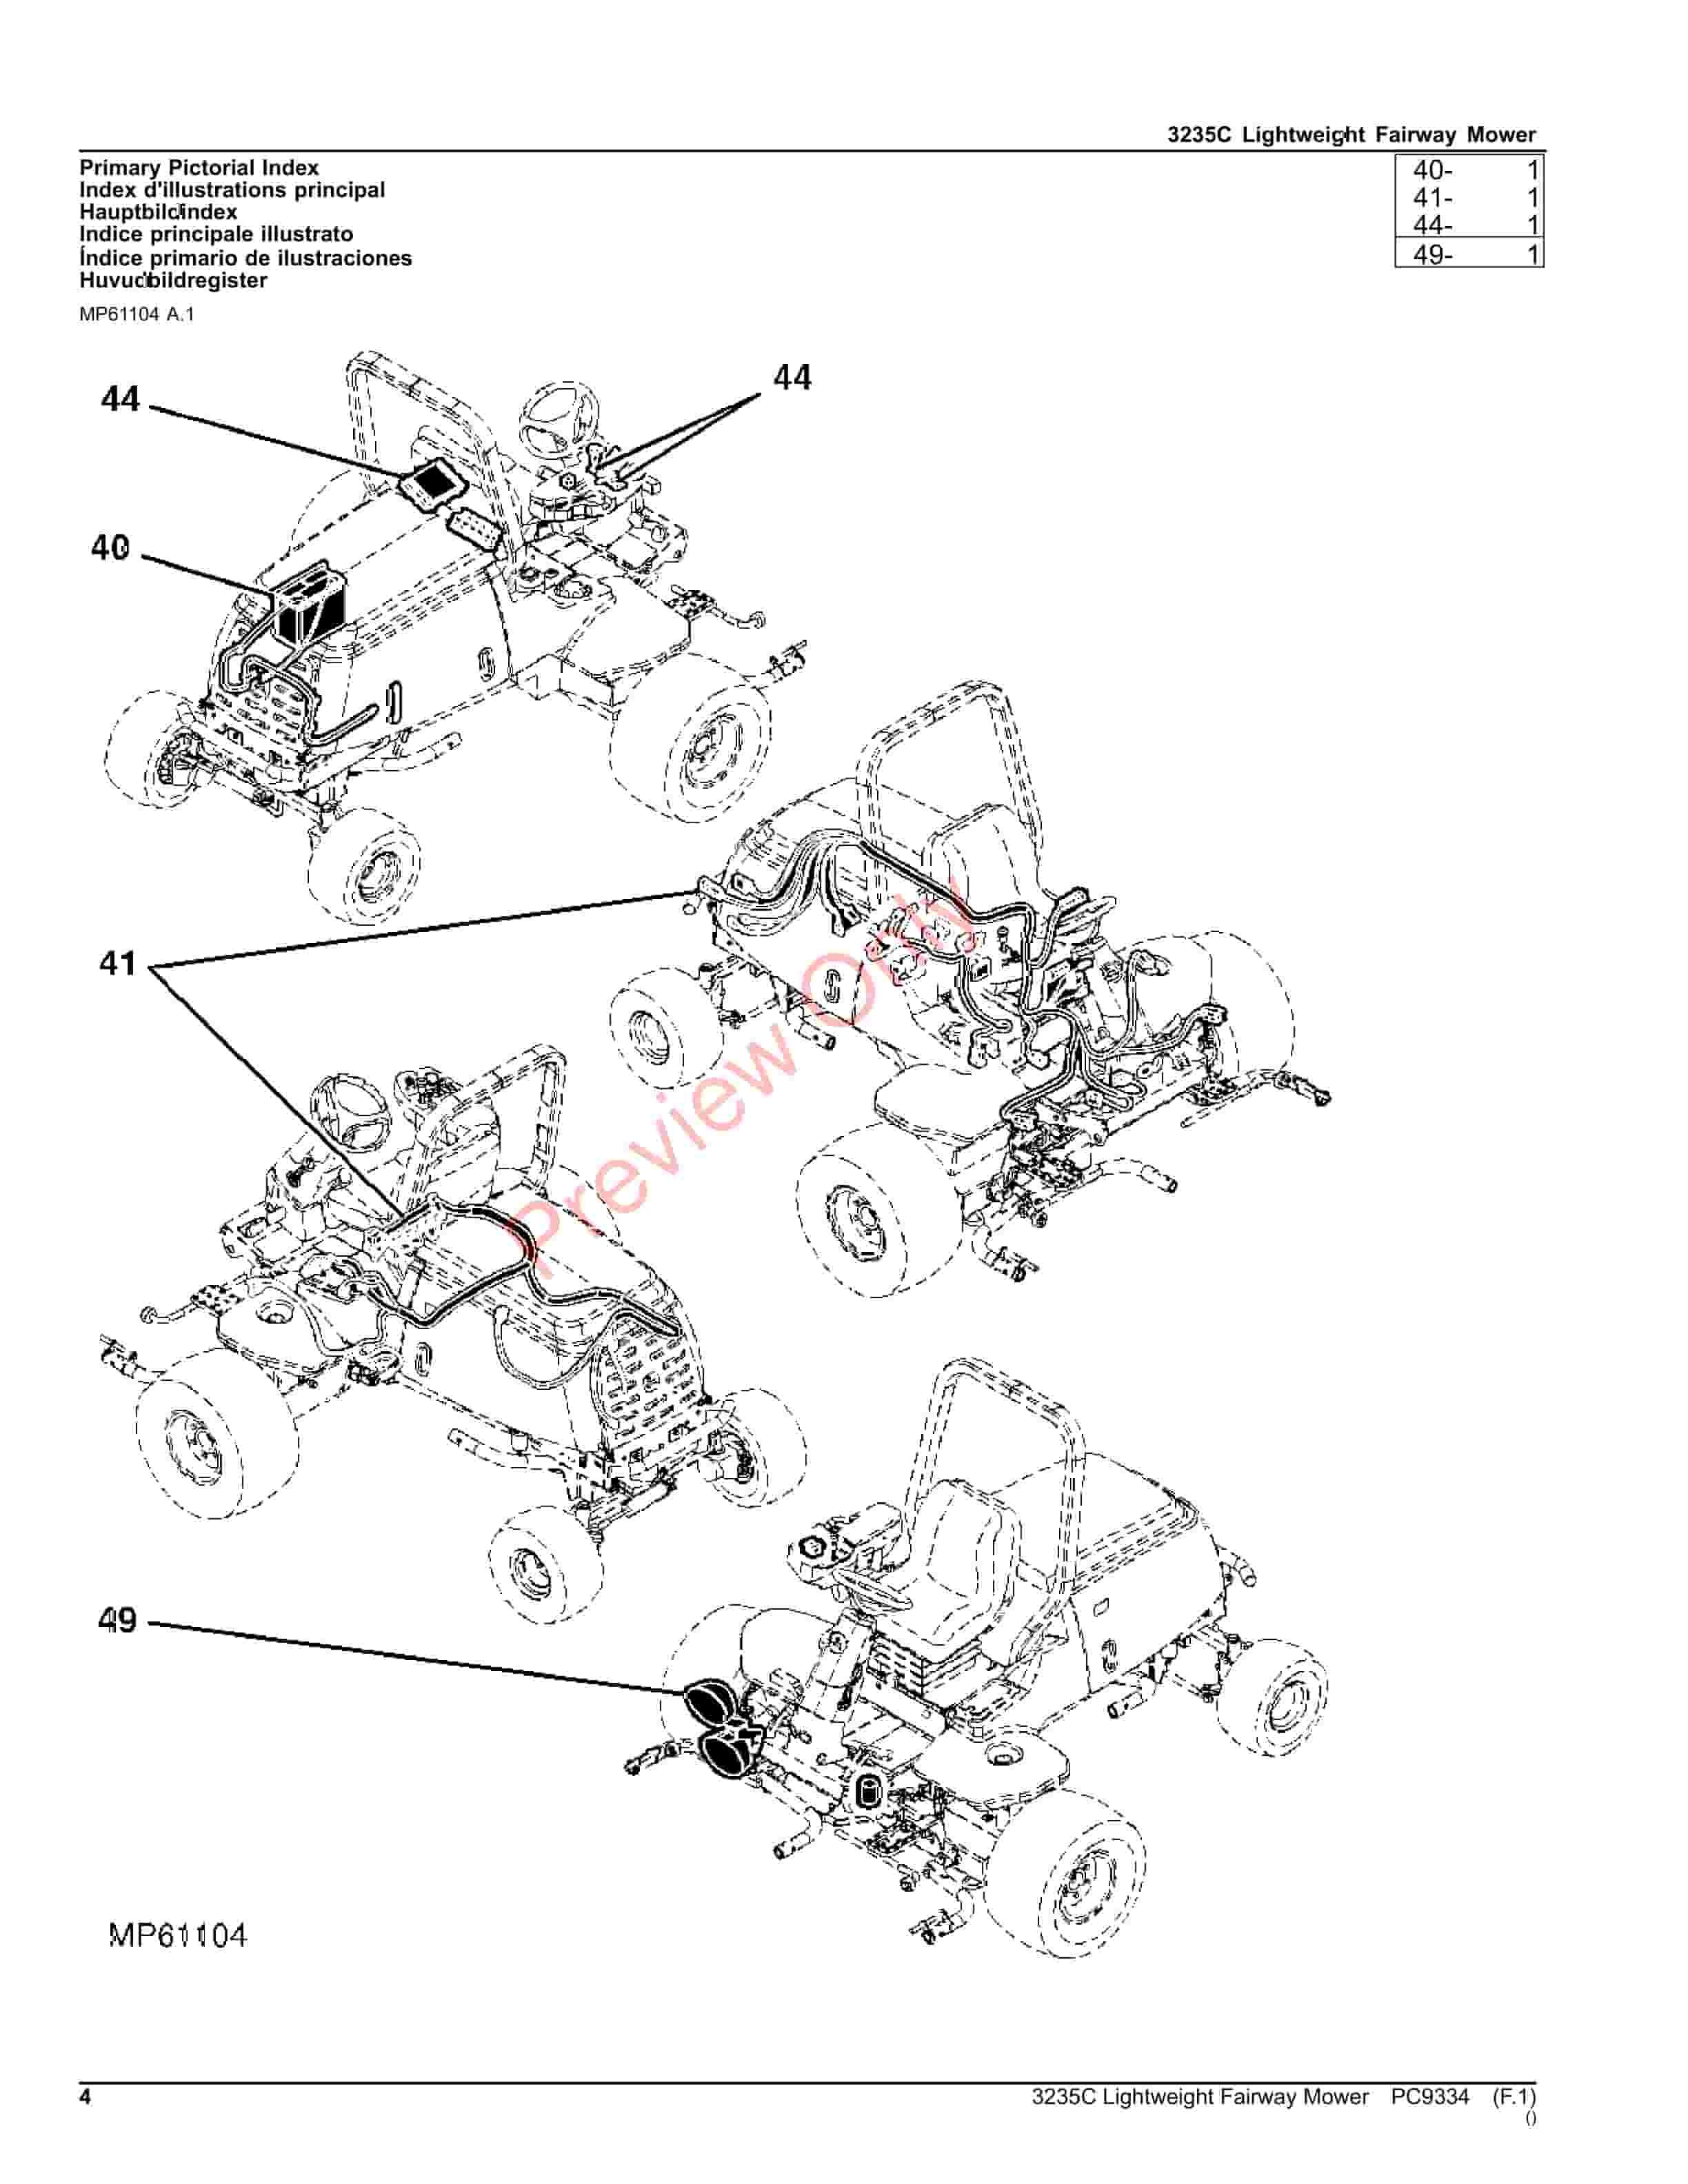 John Deere 3235C Lightweight Fairway Mower Parts Catalog PC9334 16JUL23-4